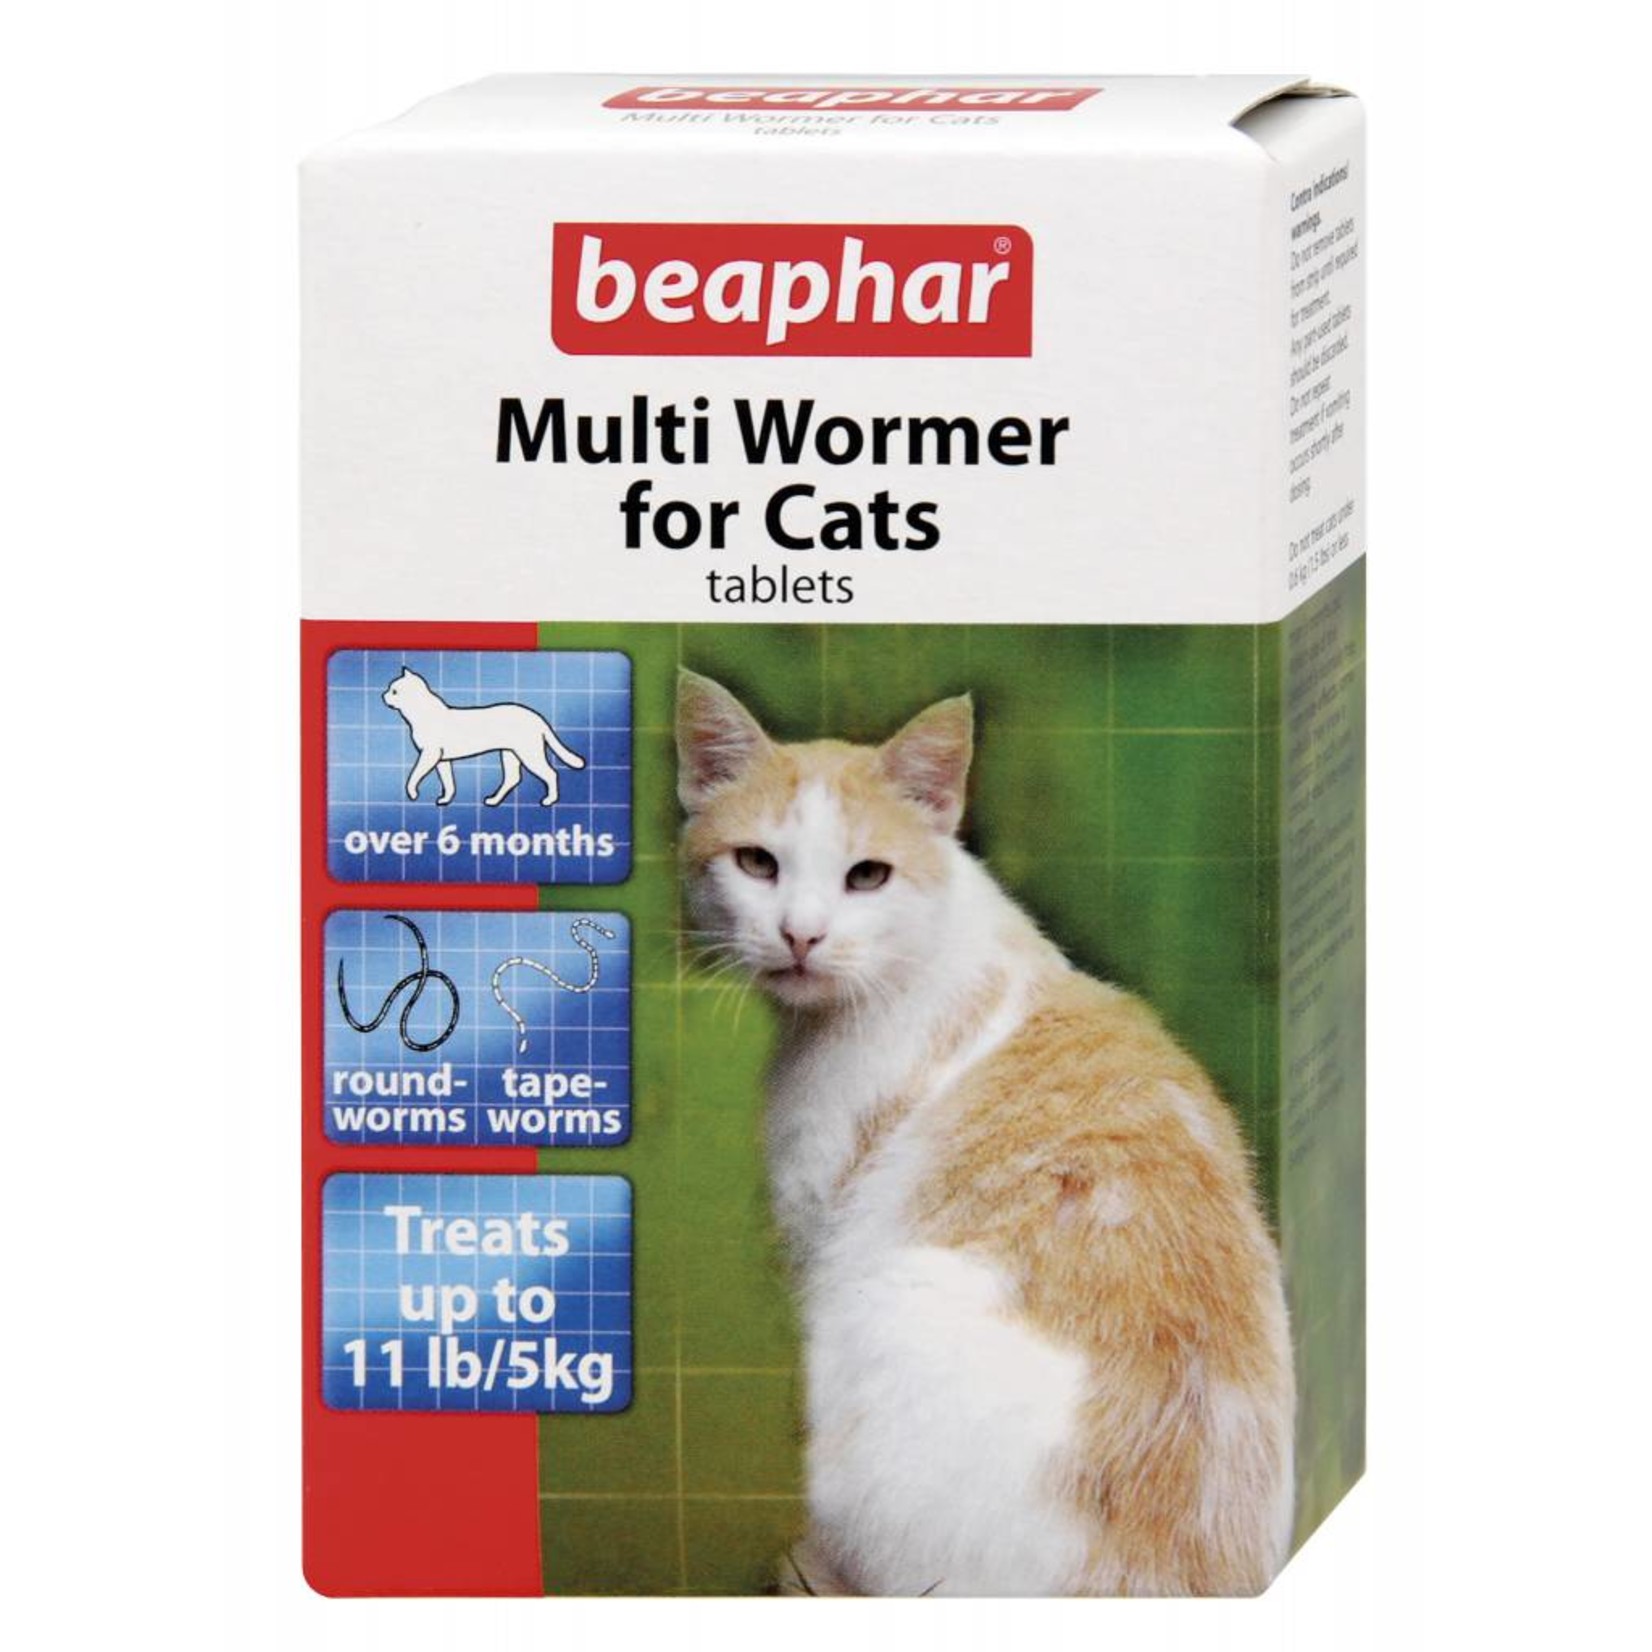 Beaphar Multi Wormer for Cats, 12 Tablets